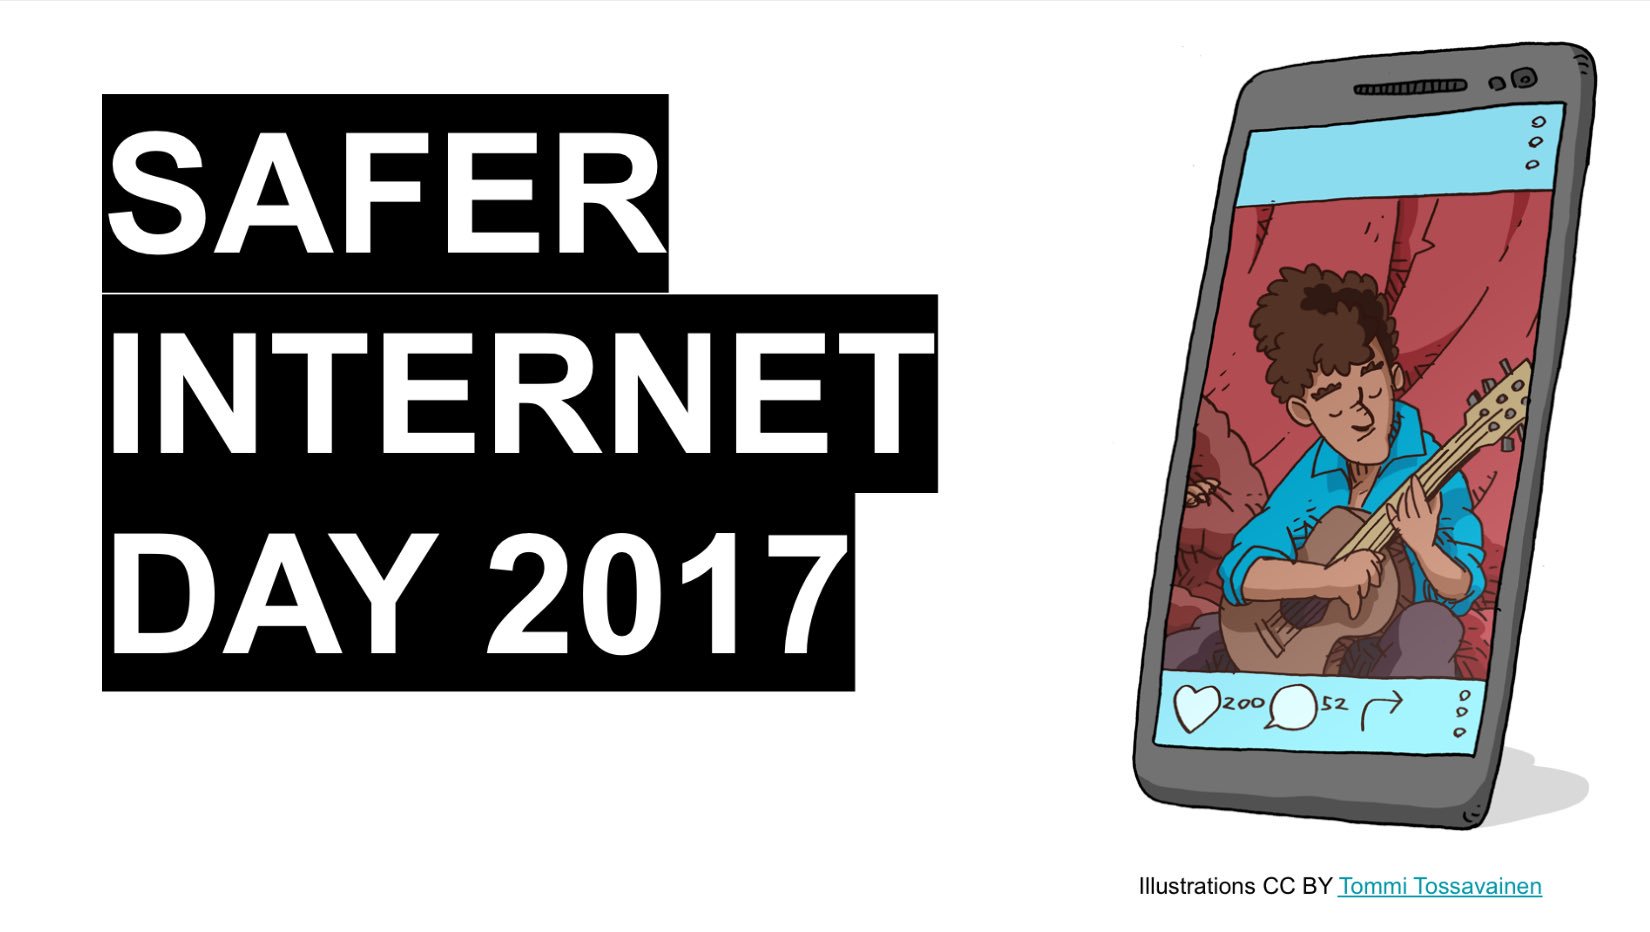 Safer Internet Day 2017 resources